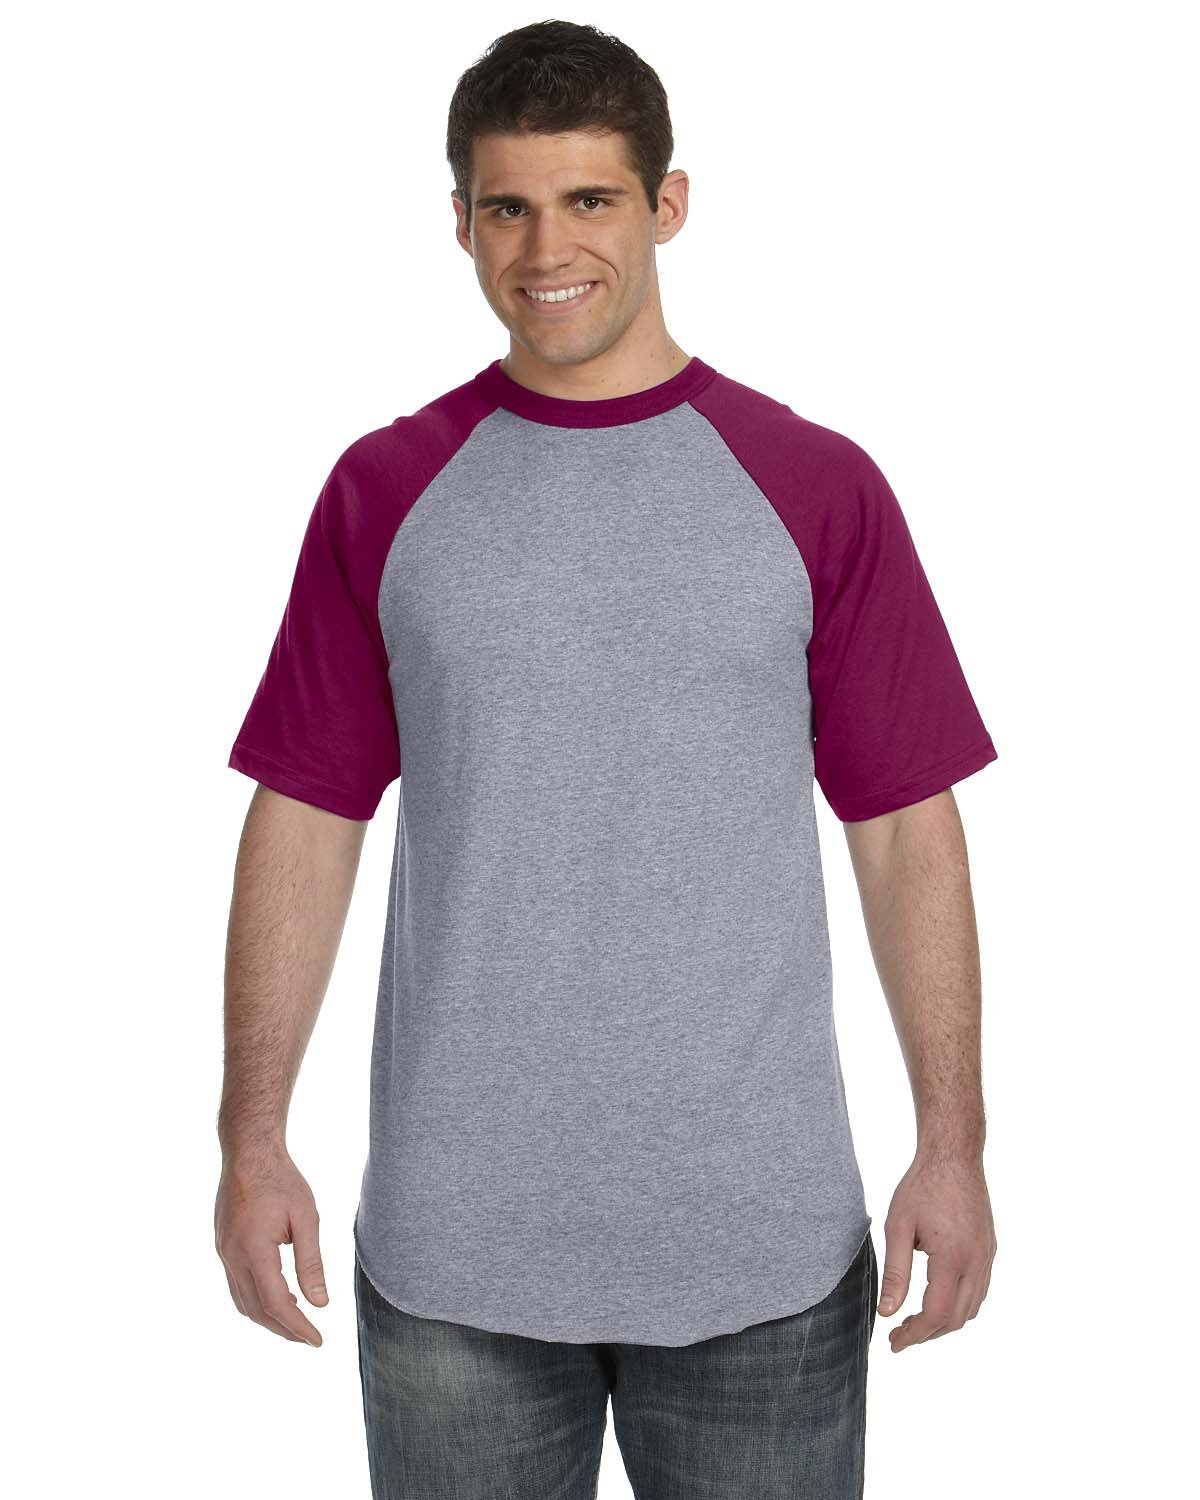 Augusta Sportswear Adult Short-Sleeve Baseball Jersey ATH HTHR/ MAROON 